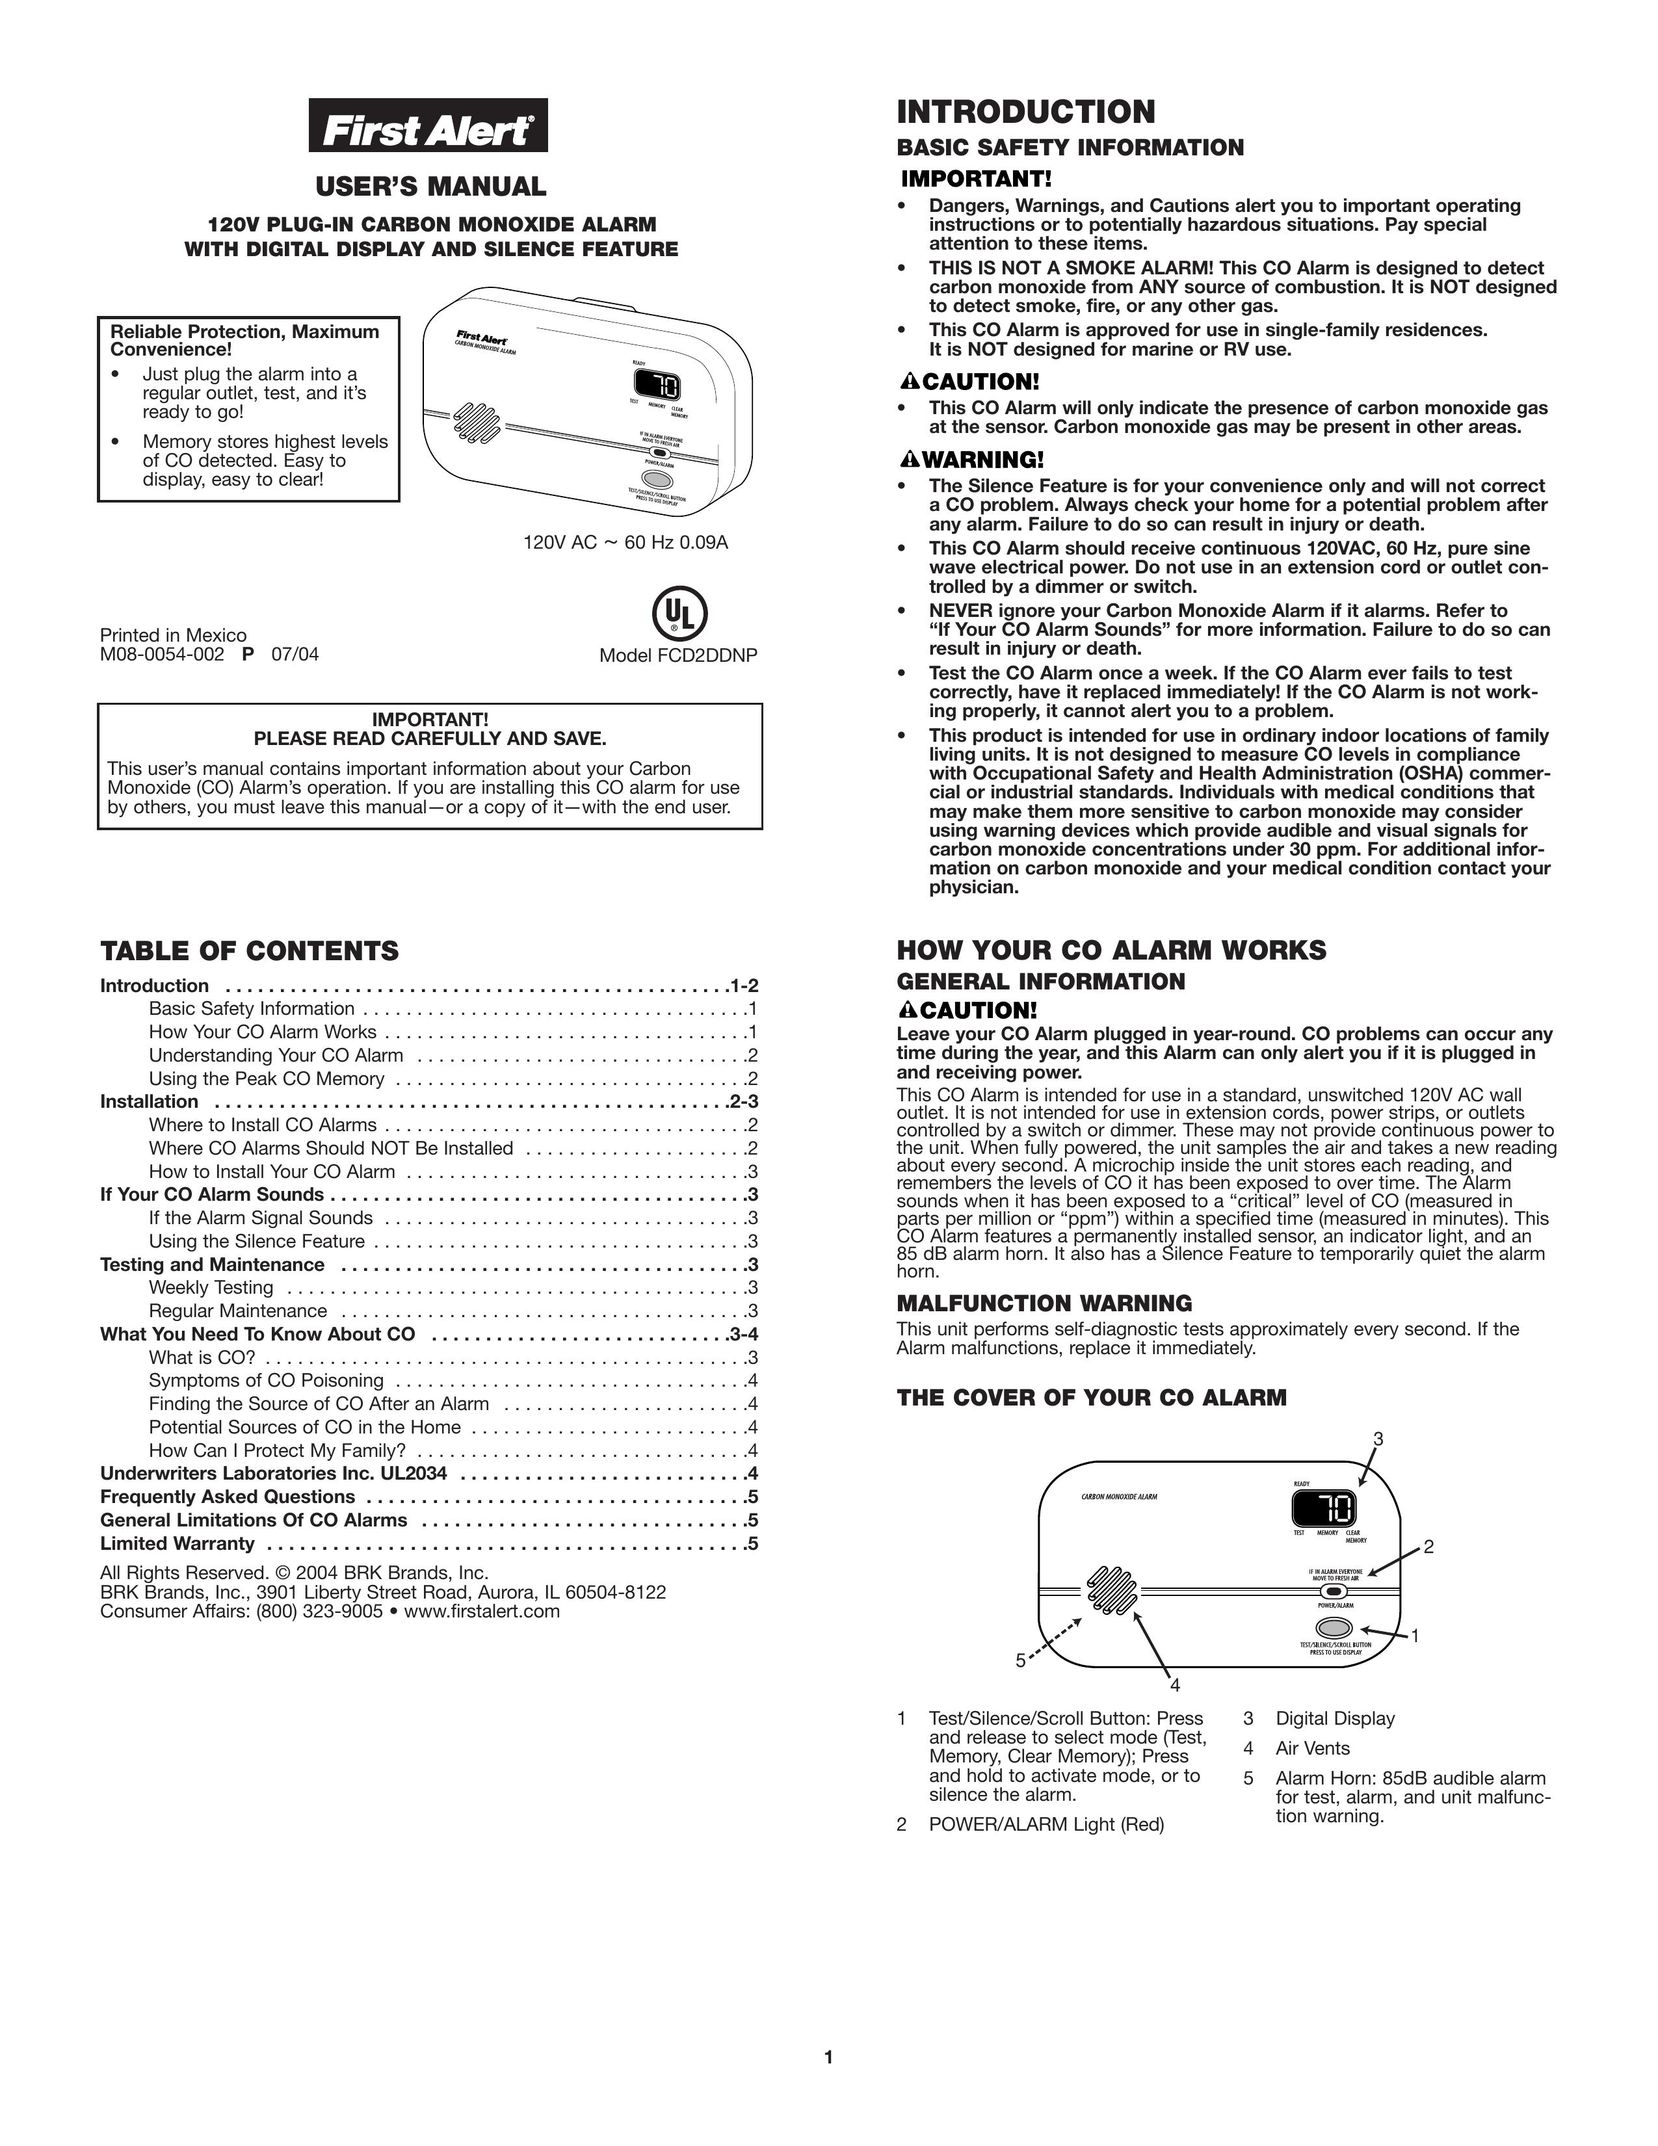 First Alert FCD2DDNP Carbon Monoxide Alarm User Manual